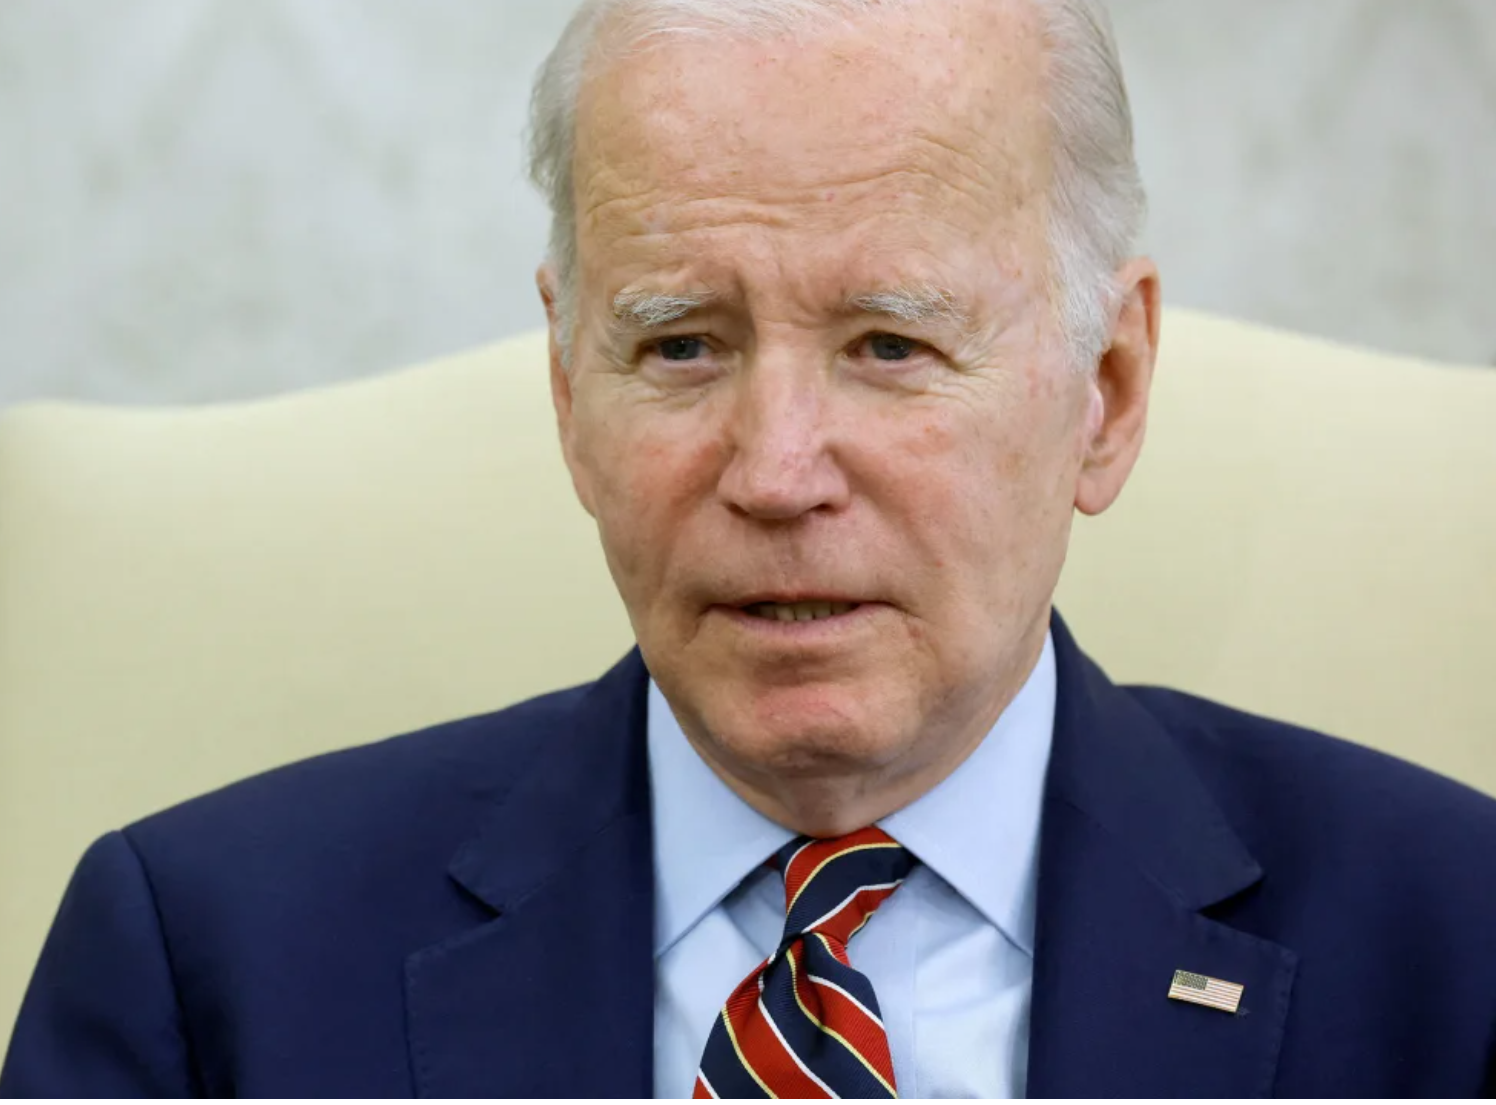 Biden facing political pressures from both parties over handling of migration challenge